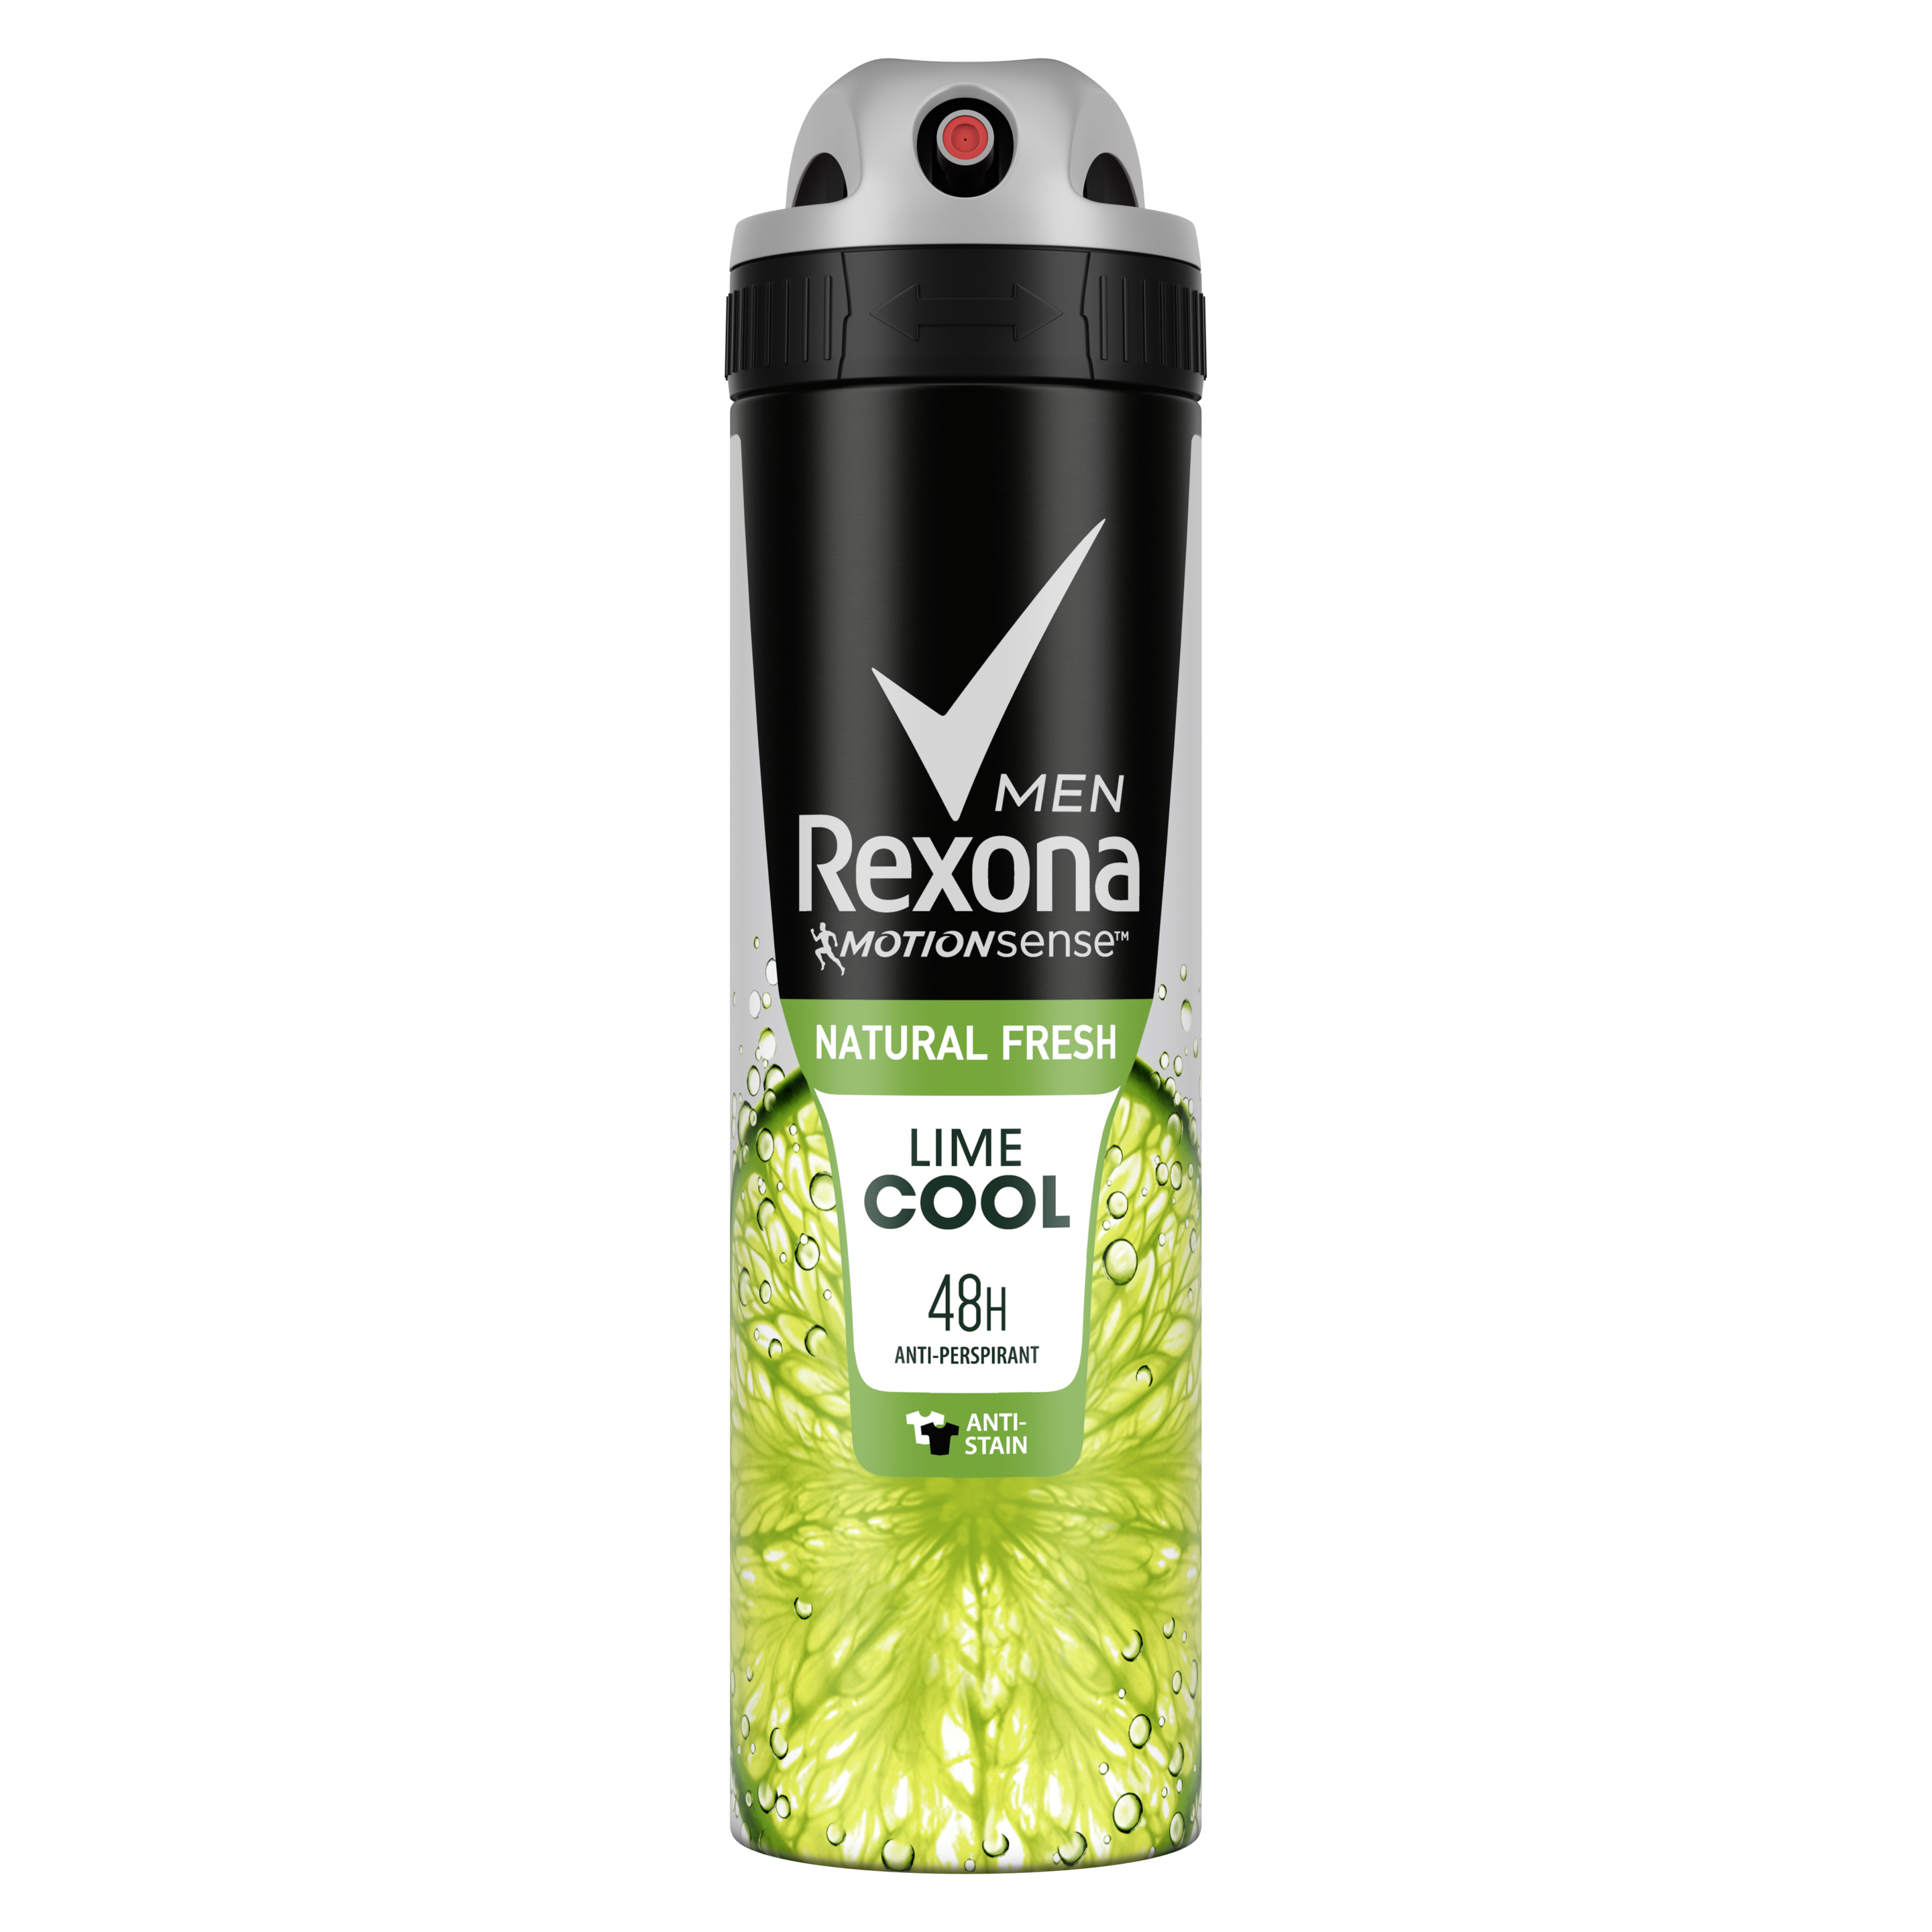 Rexona Men Natural Fresh Lime Cool Aerosol | Home Page